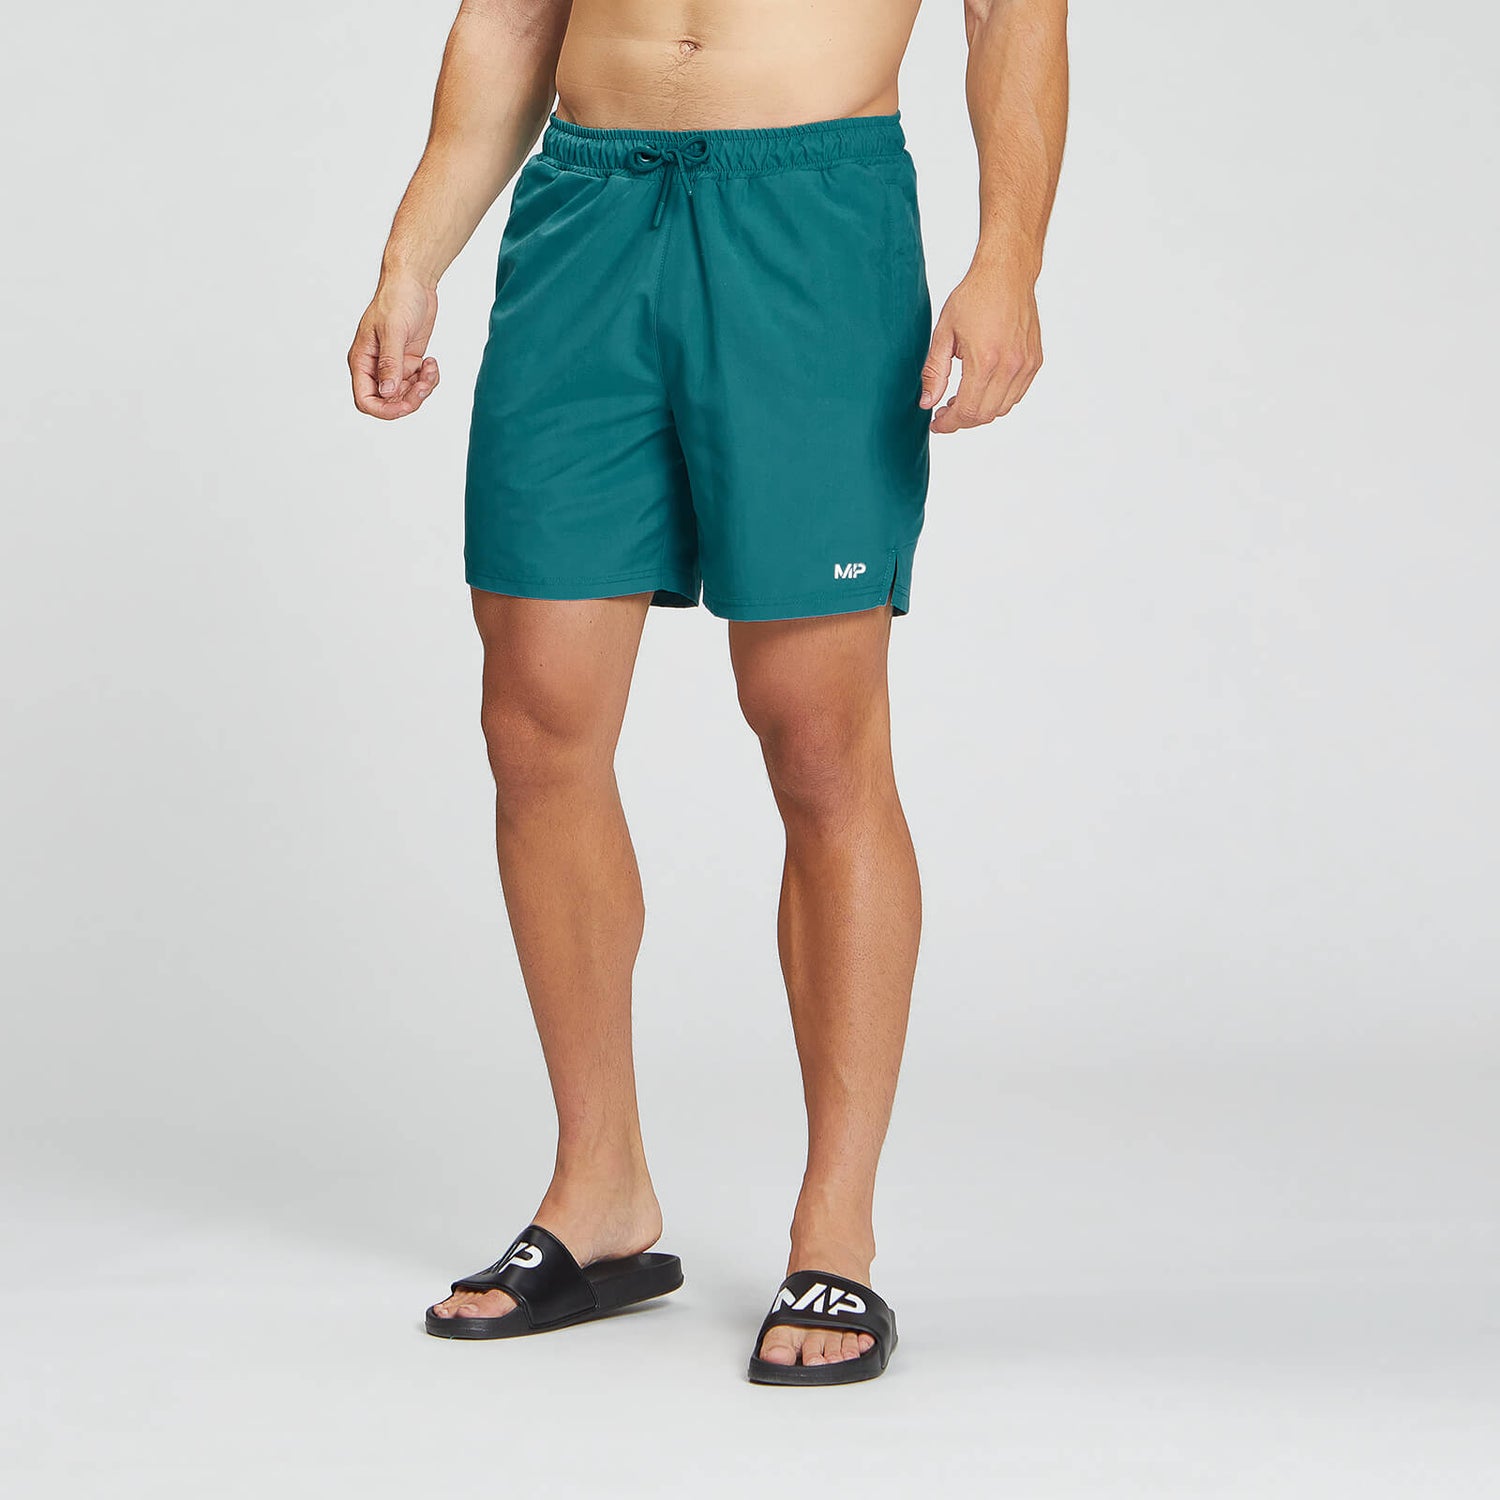 MP Pacific Swim Shorts til mænd - Blågrøn - XS